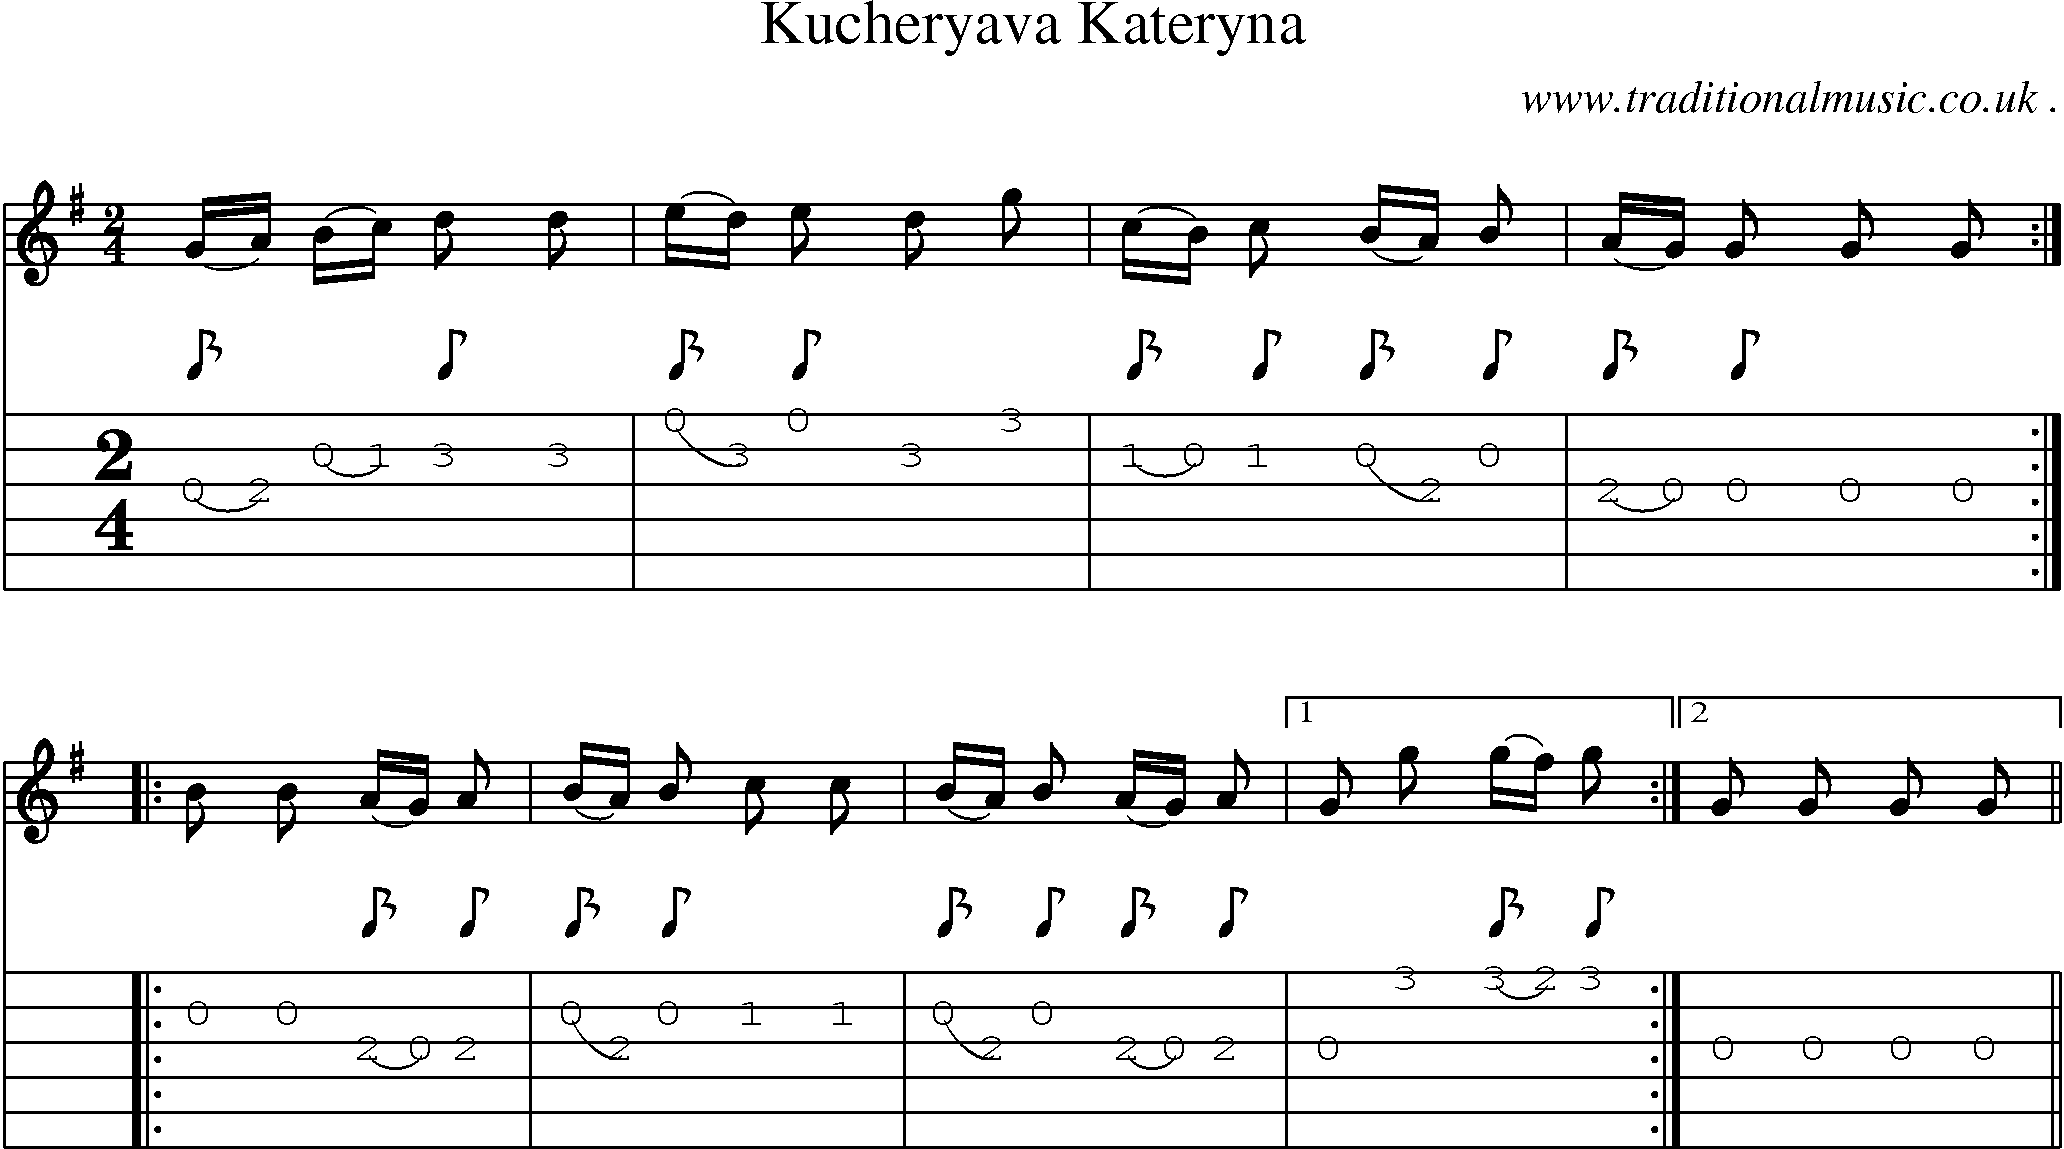 Sheet-Music and Guitar Tabs for Kucheryava Kateryna